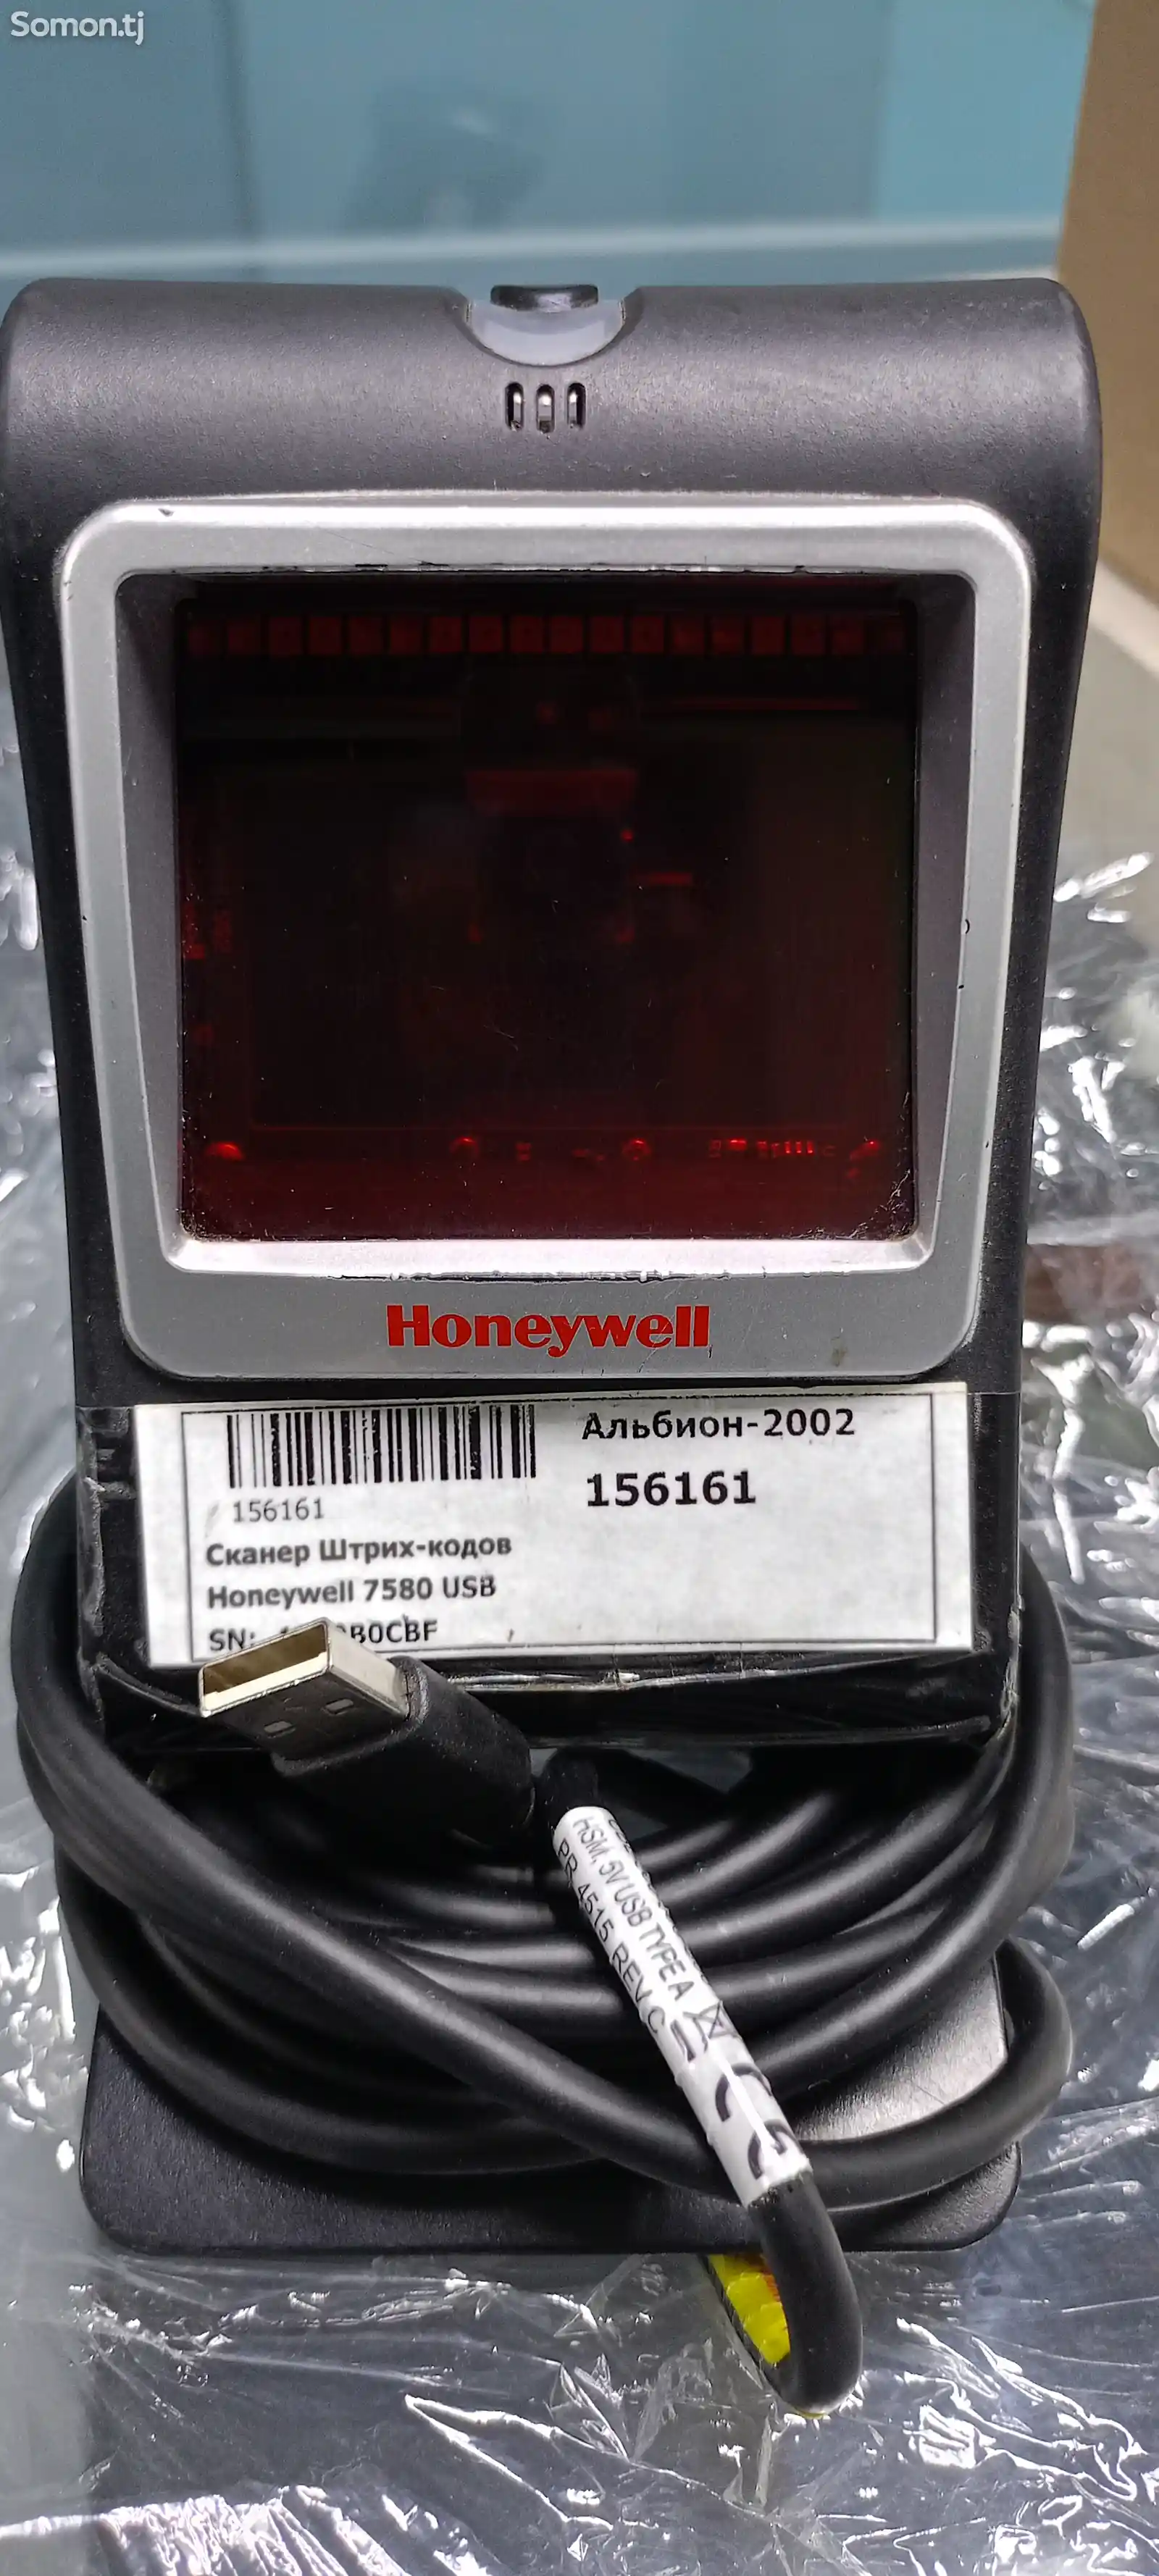 Сканер многополосный Honeywell 7580-1